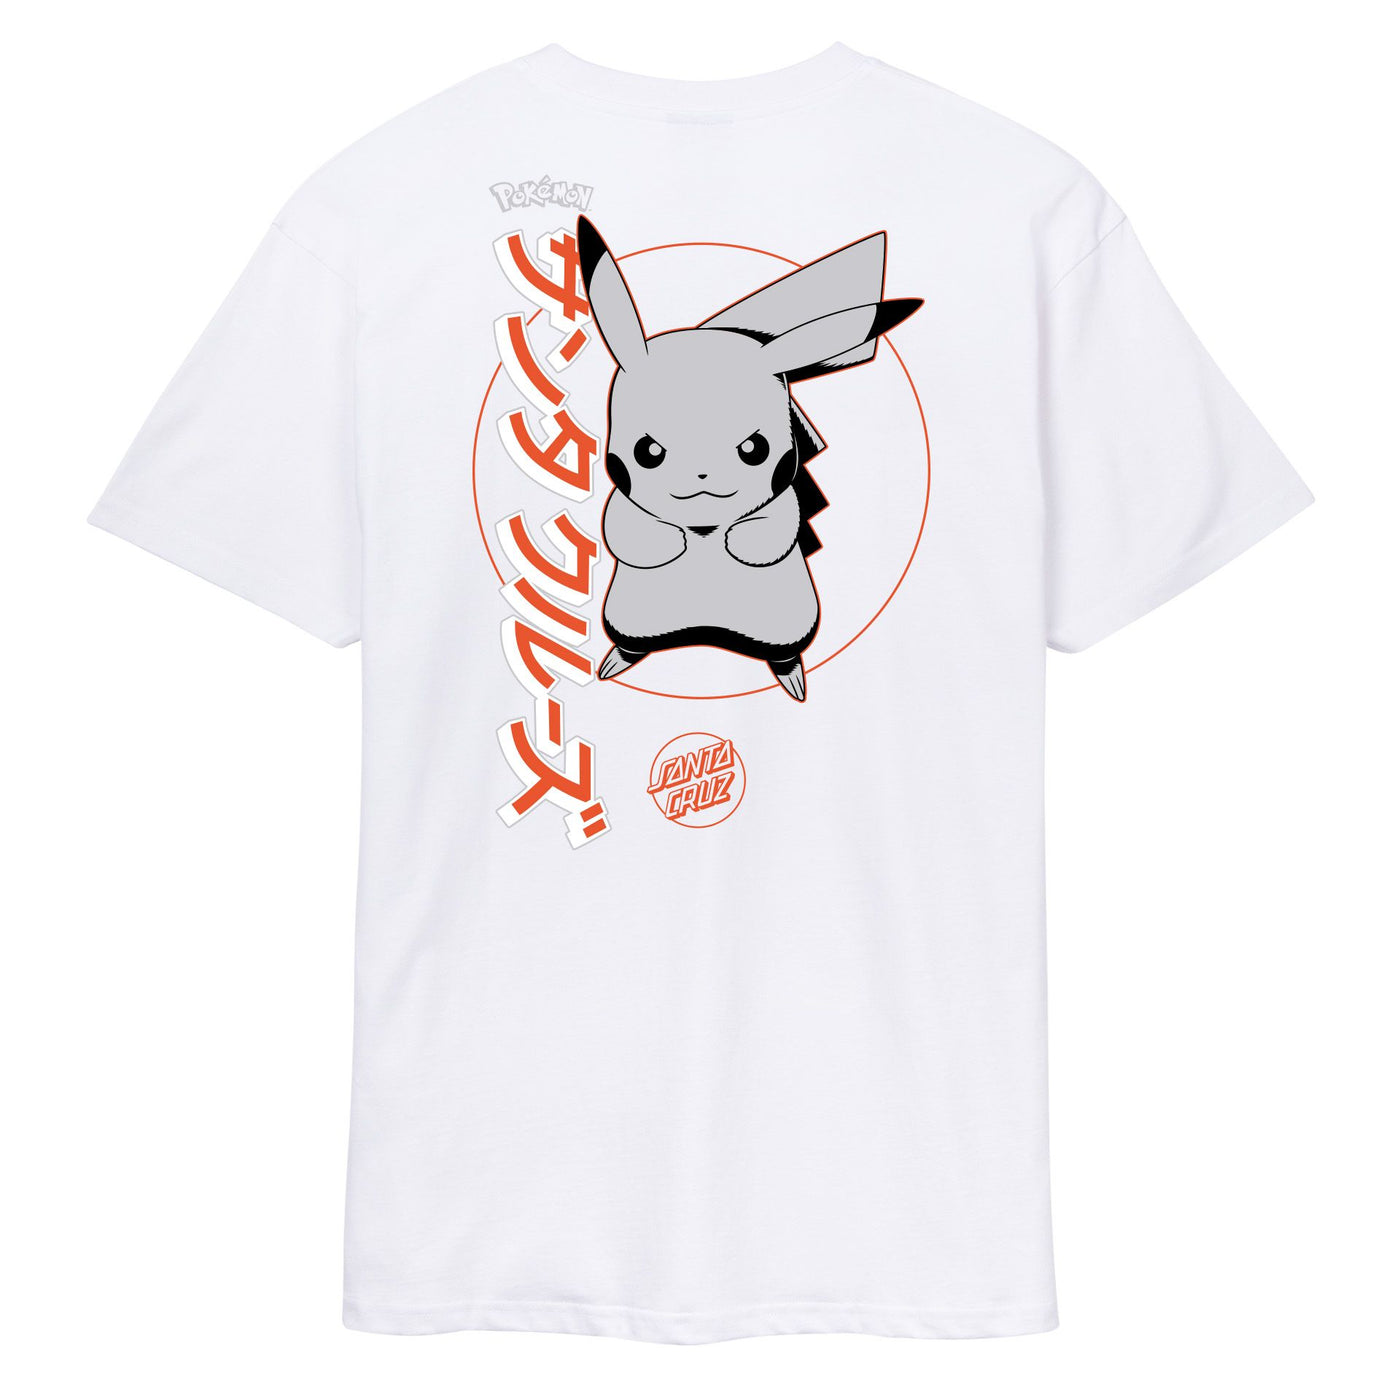 Santa Cruz X Pokémon Pikachu T-Shirt - White